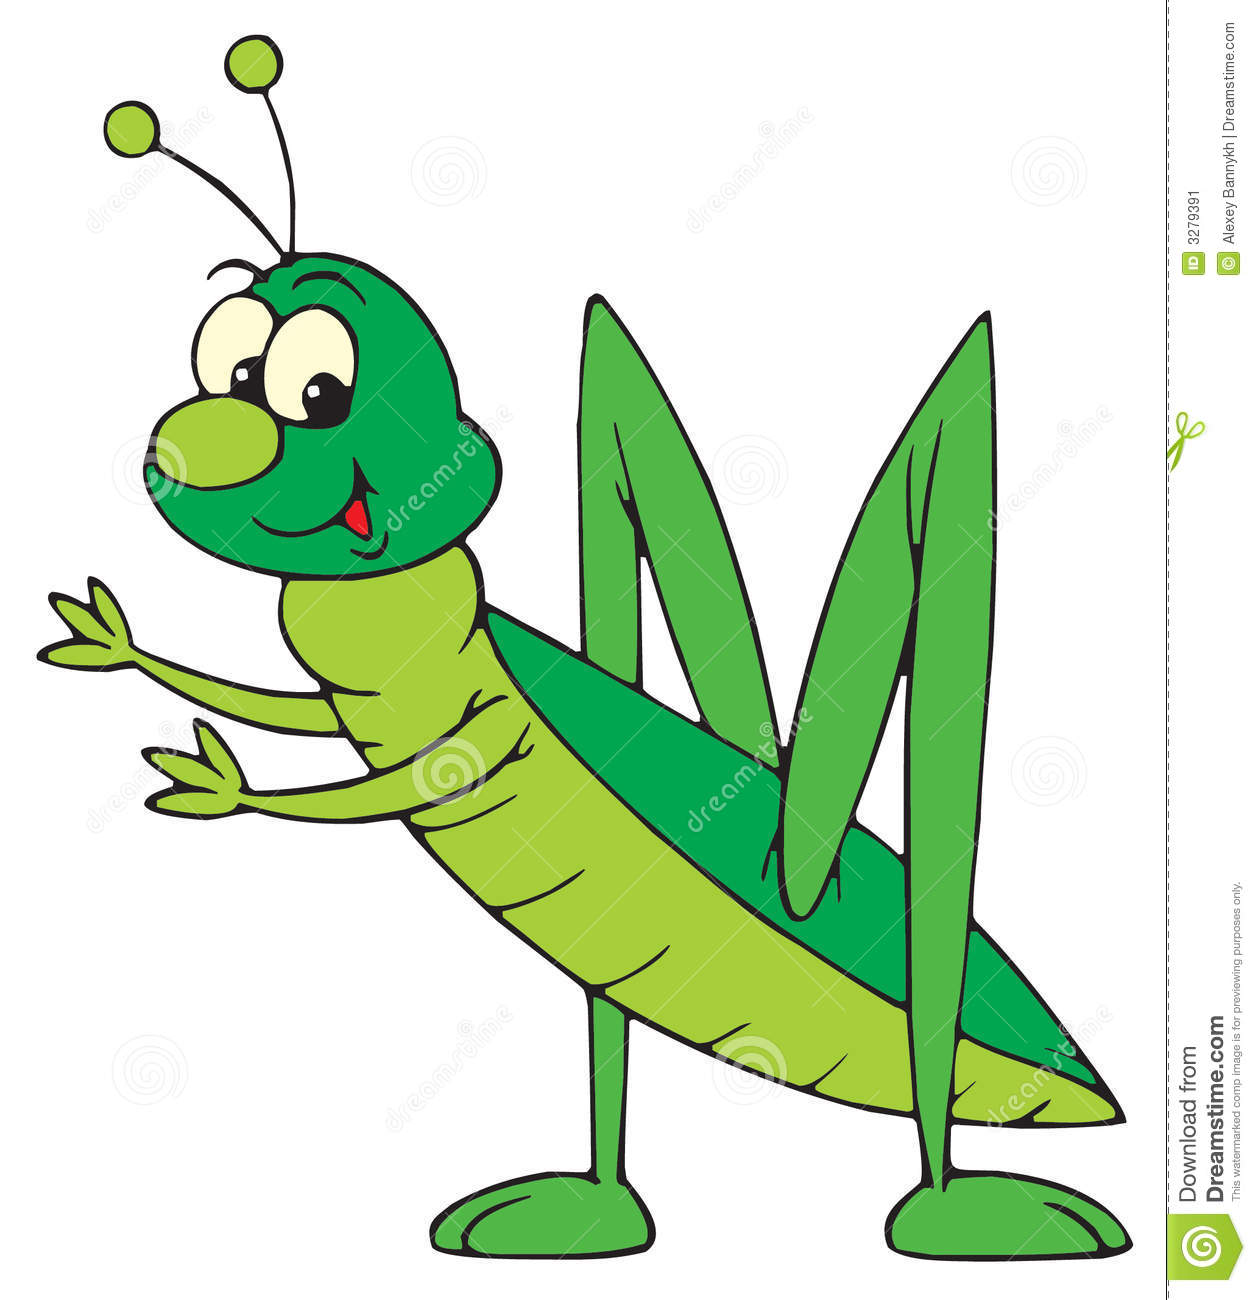 5 Grasshopper Vector Graphics Images